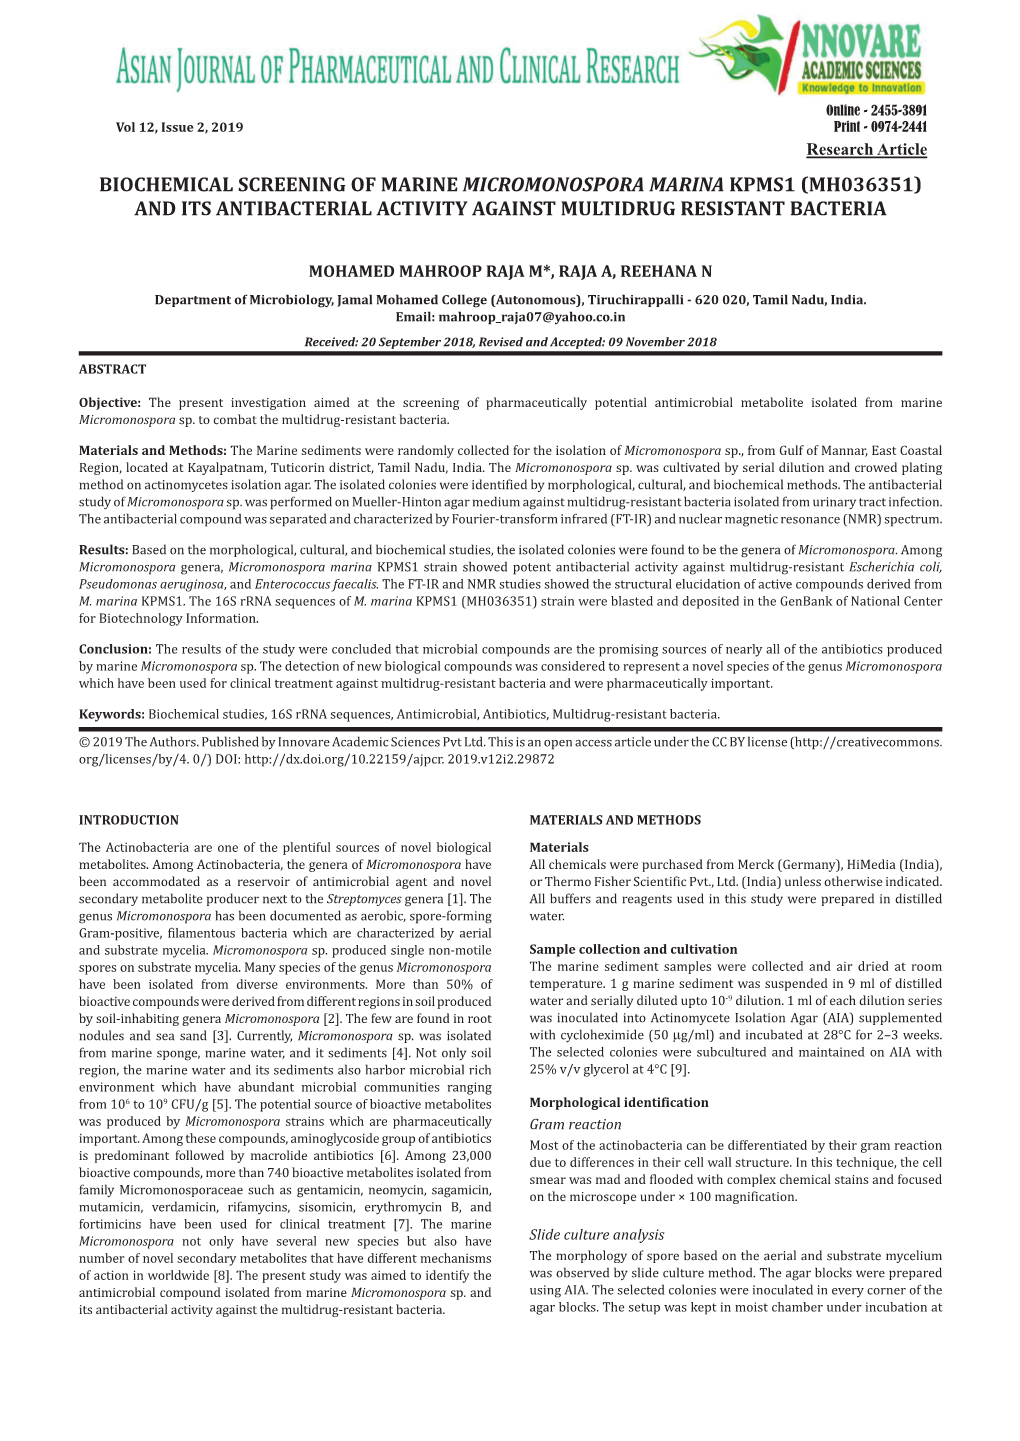 Biochemical Screening of Marine Micromonospora Marina Kpms1 (Mh036351) and Its Antibacterial Activity Against Multidrug Resistant Bacteria